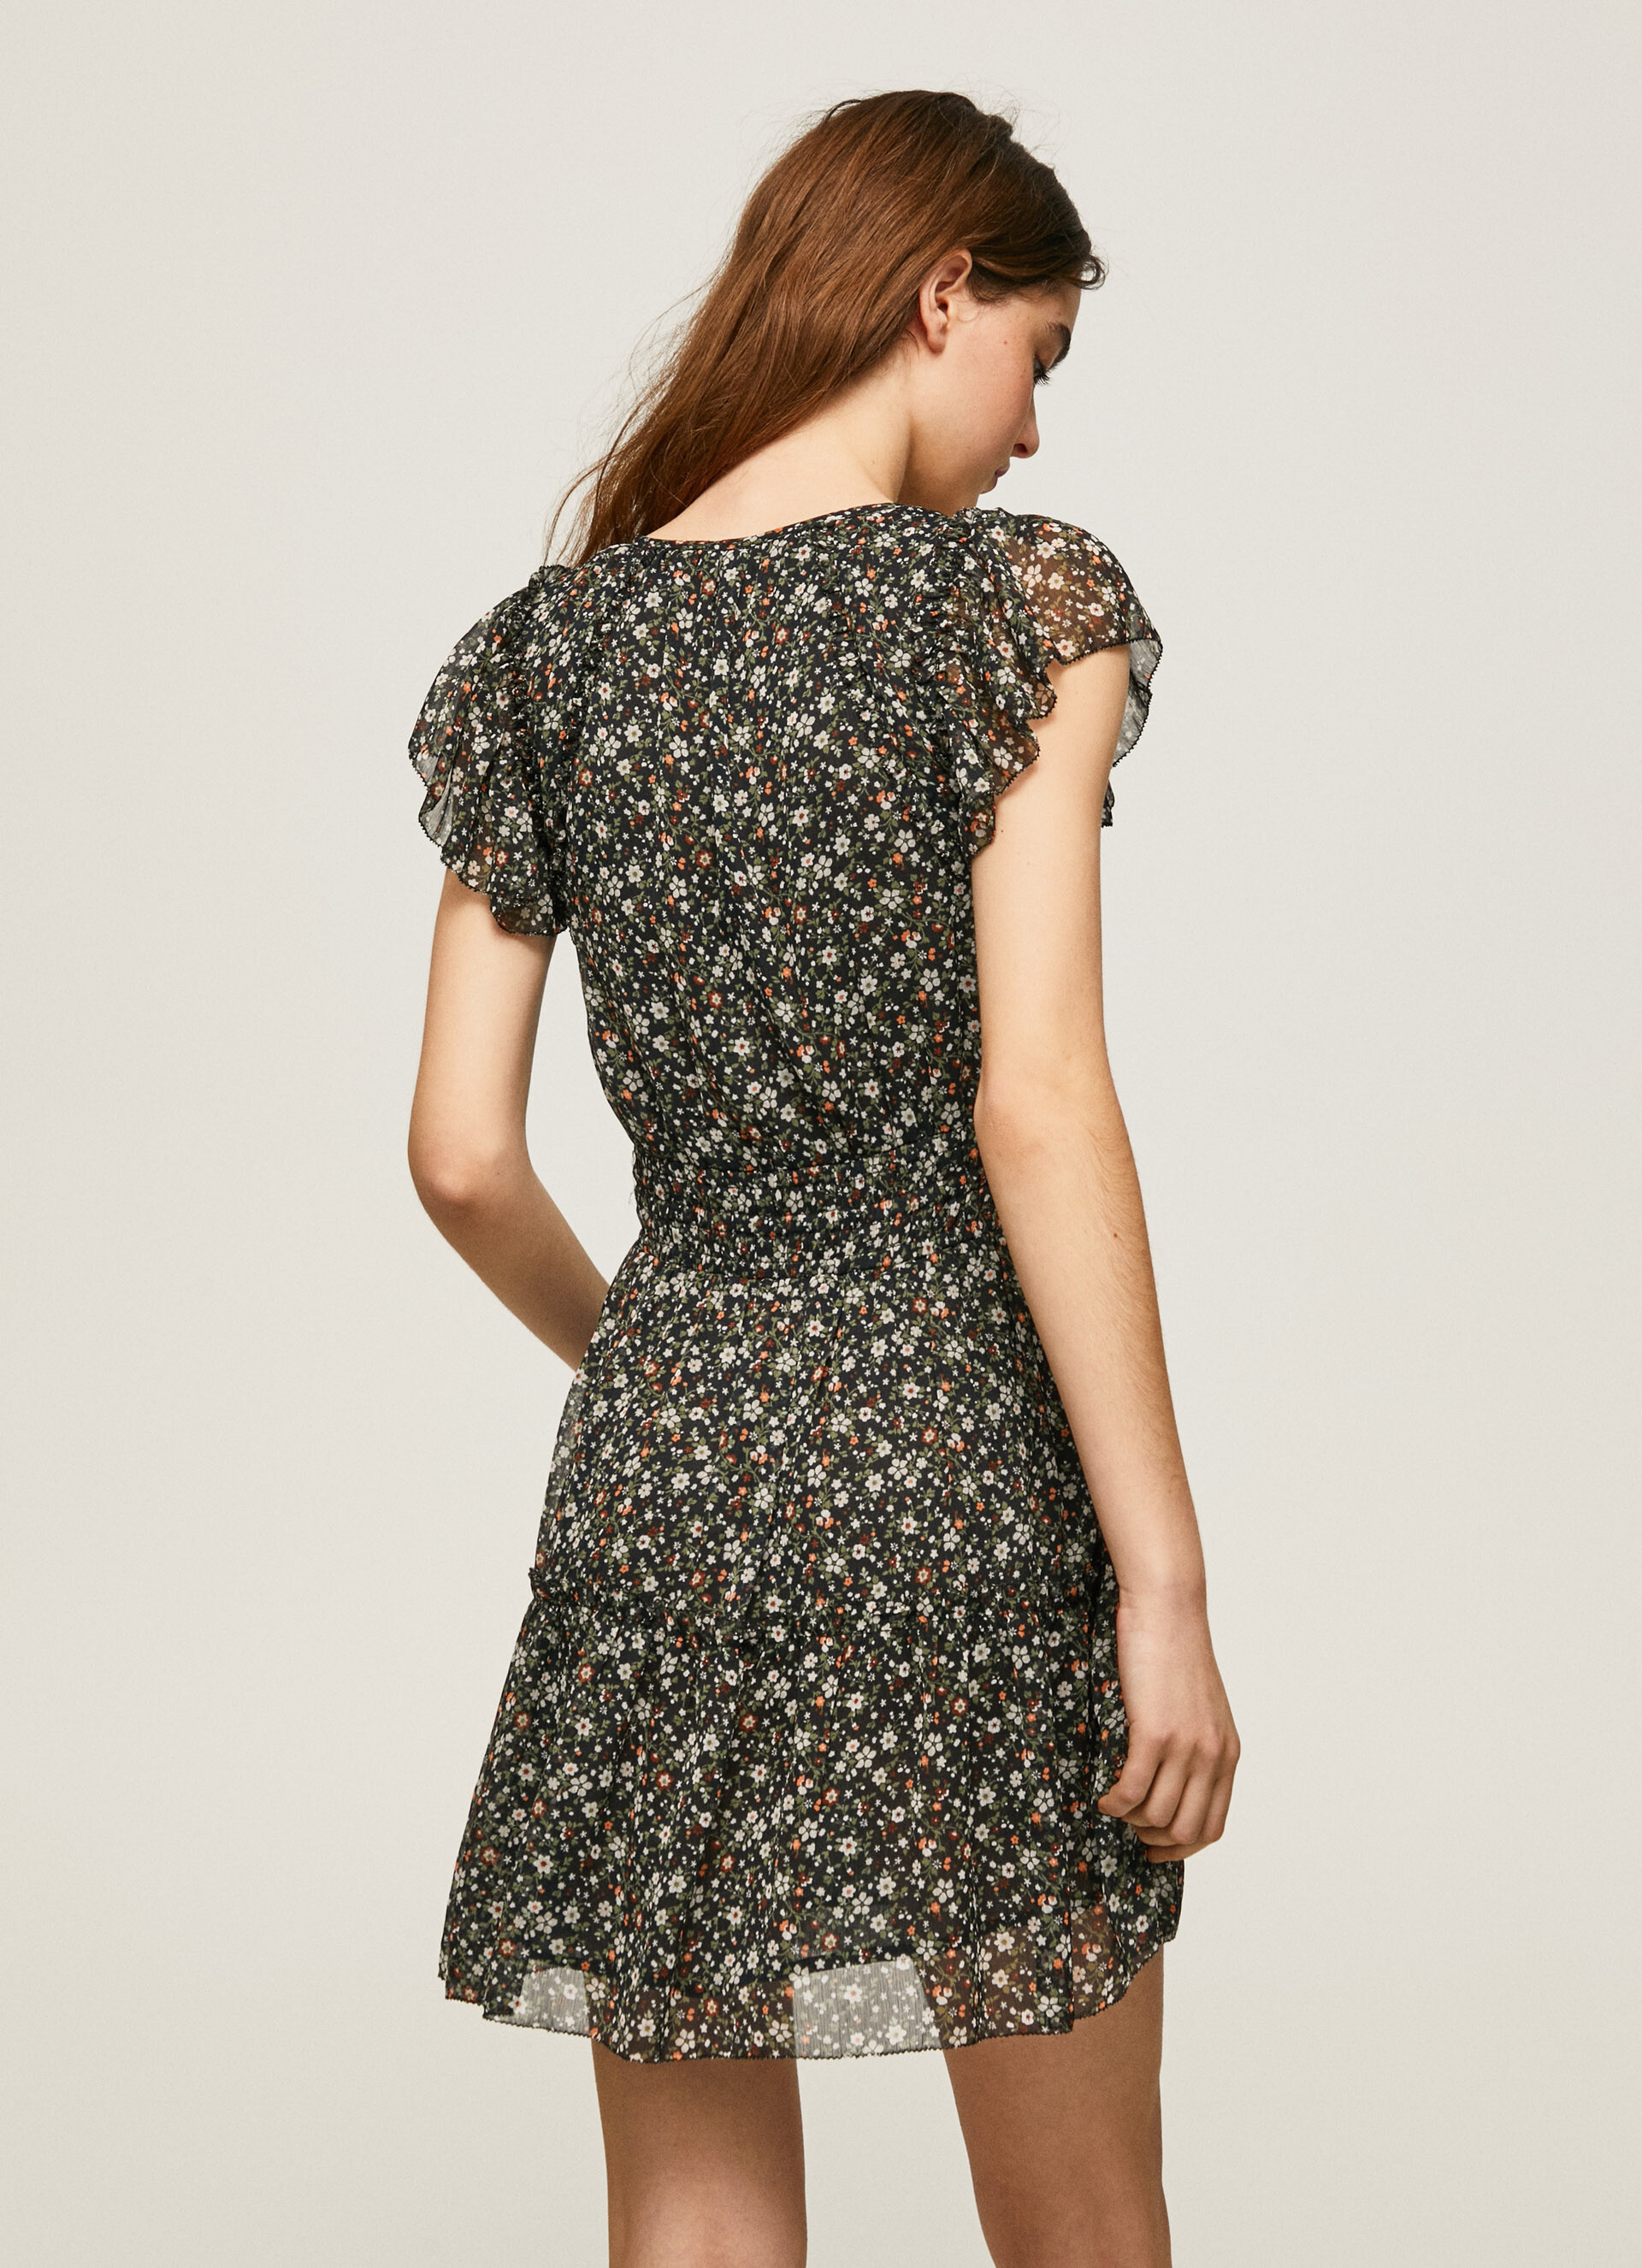 Pepe Jeans - Short dress with floral pattern, Black, large image number 4